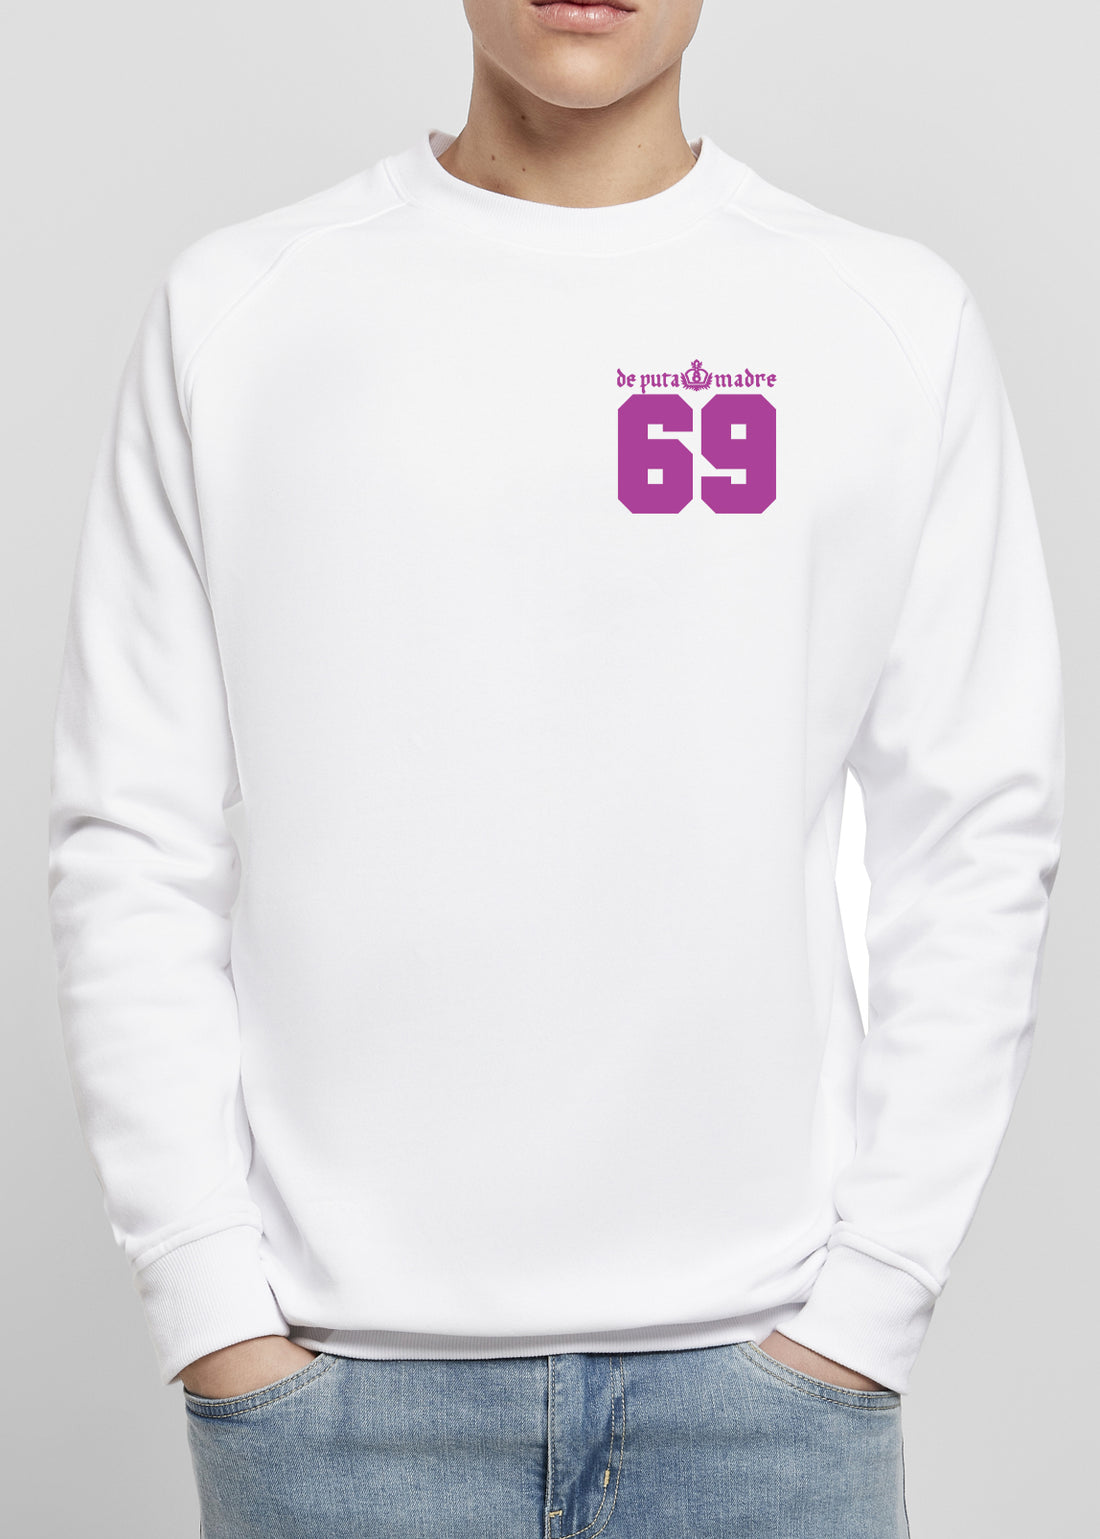 DPM69 Men's Sweatshirt design Basic 69